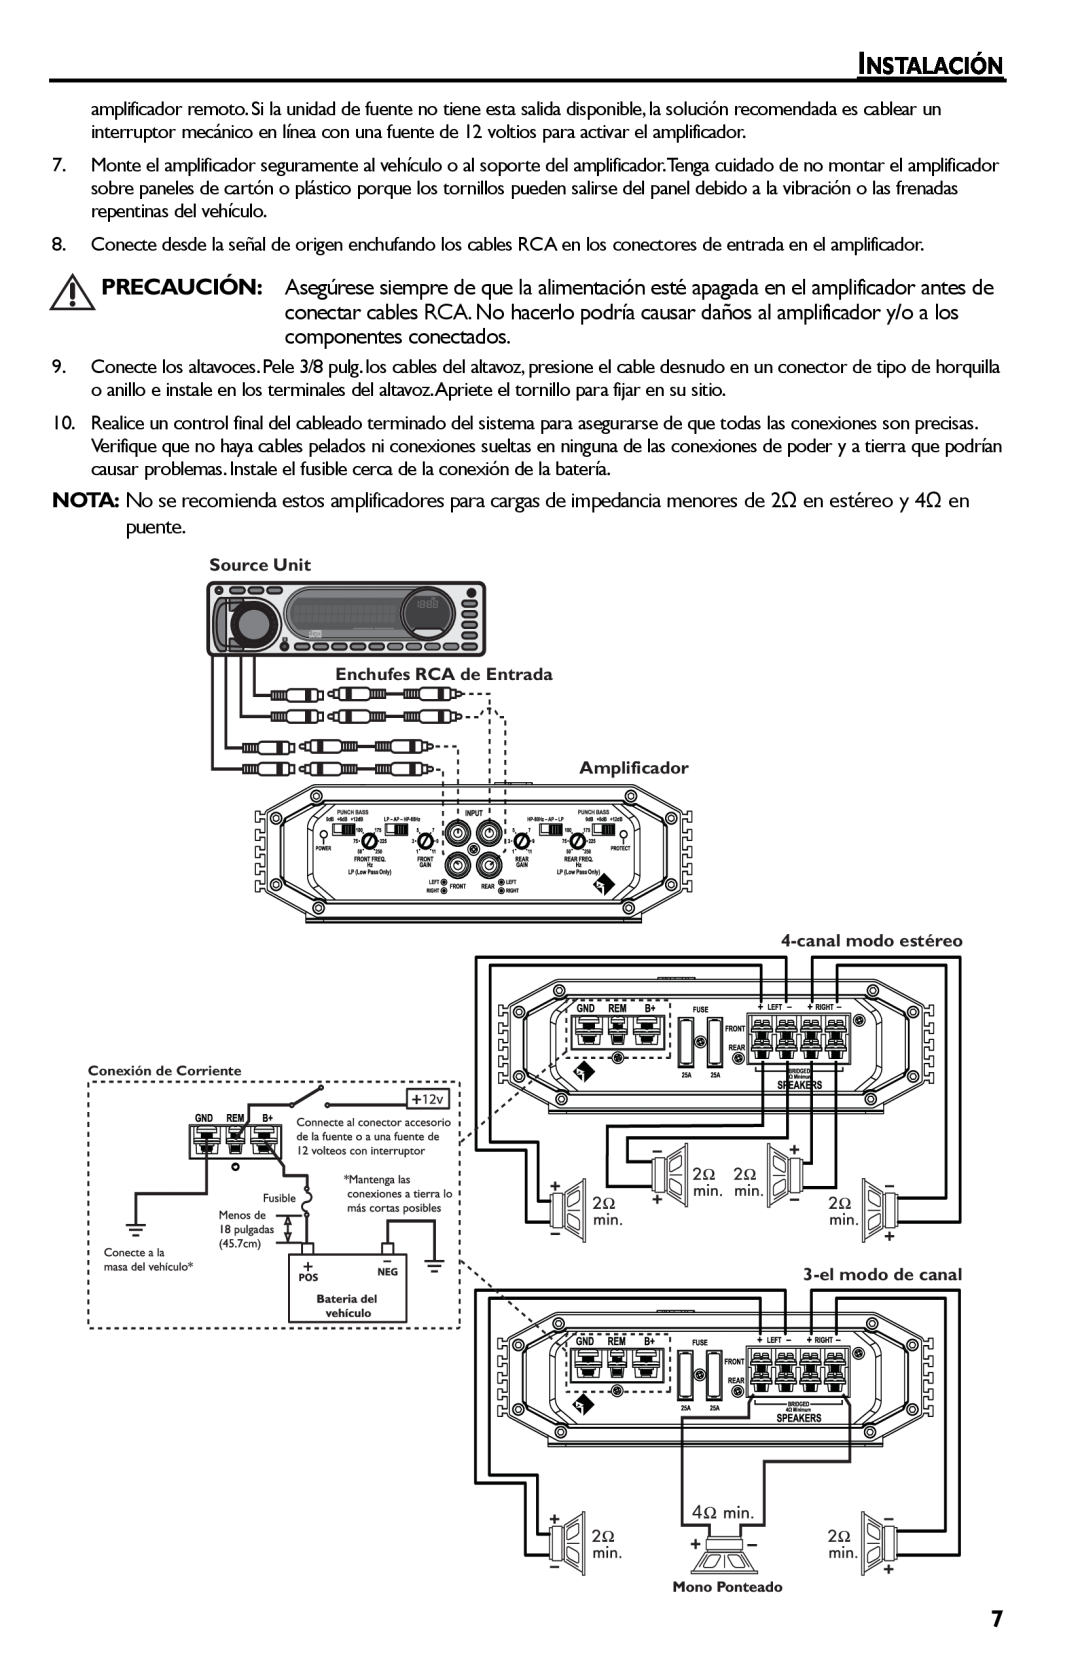 Rockford Fosgate R300-4 manual Source Unit Enchufes RCA de Entrada Amplificador, canalmodo estéreo, elmodo de canal 